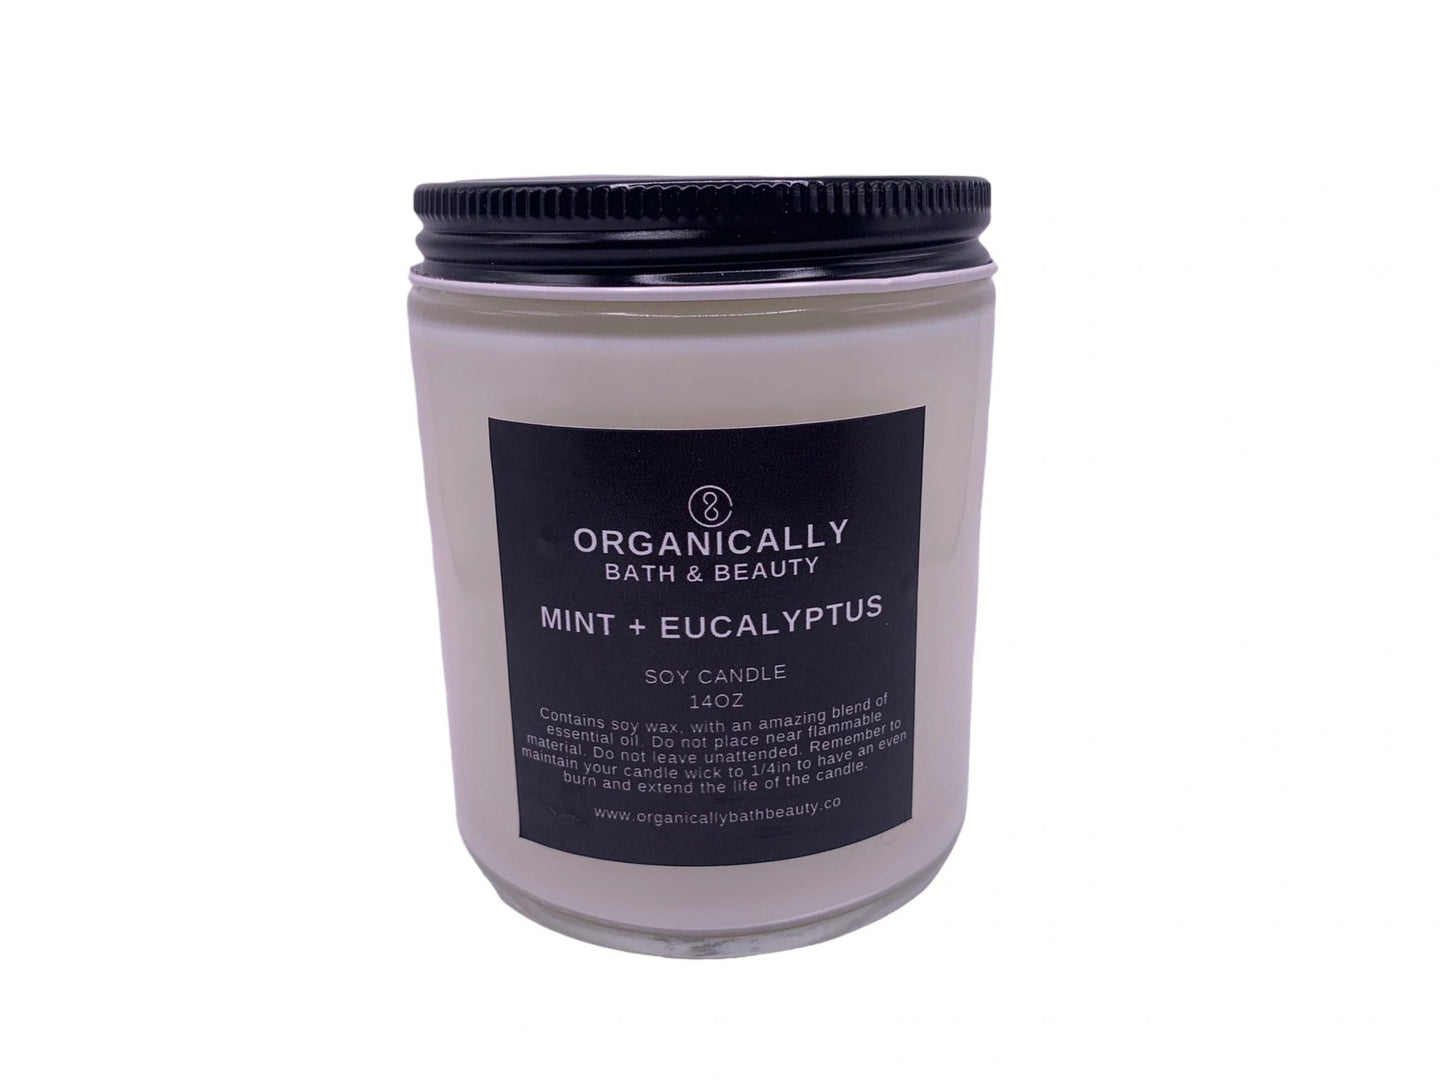 Mint + Eucalyptus Soy Candle (14oz) - Organically Bath & Beauty